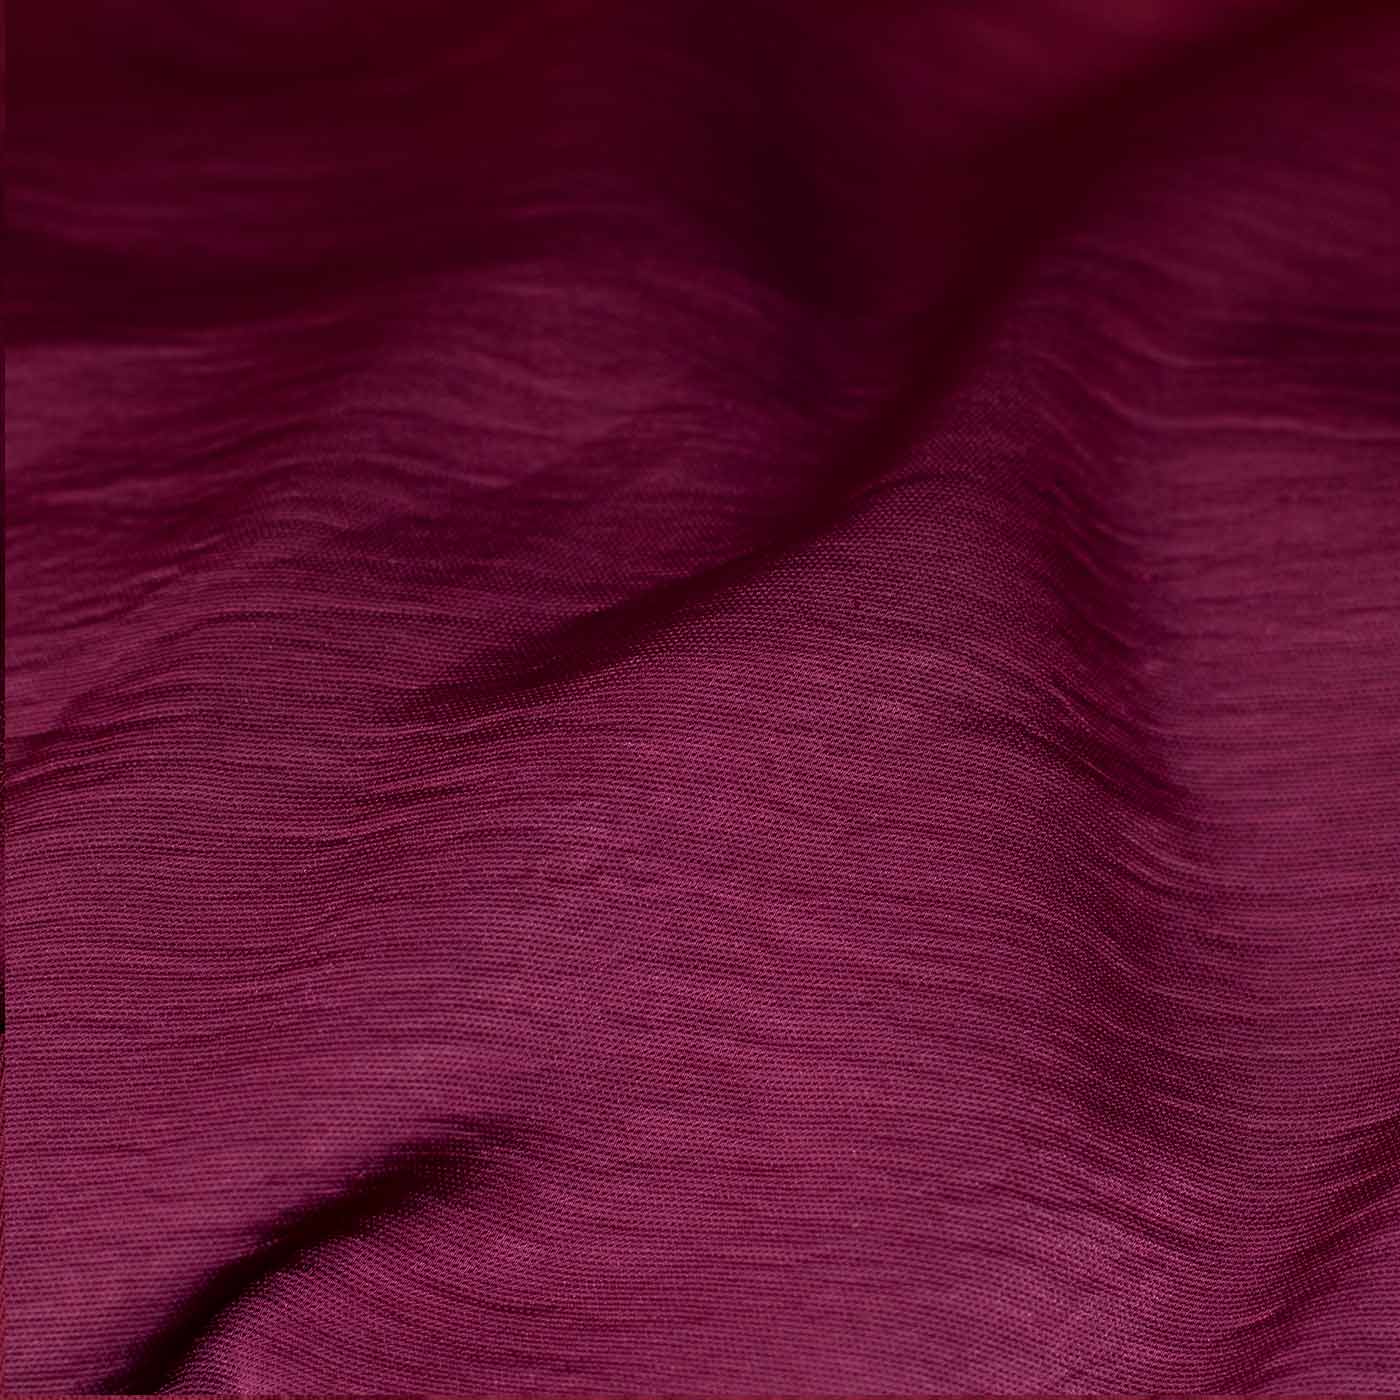 Quality Burgundy Gauze Cotton Fabric